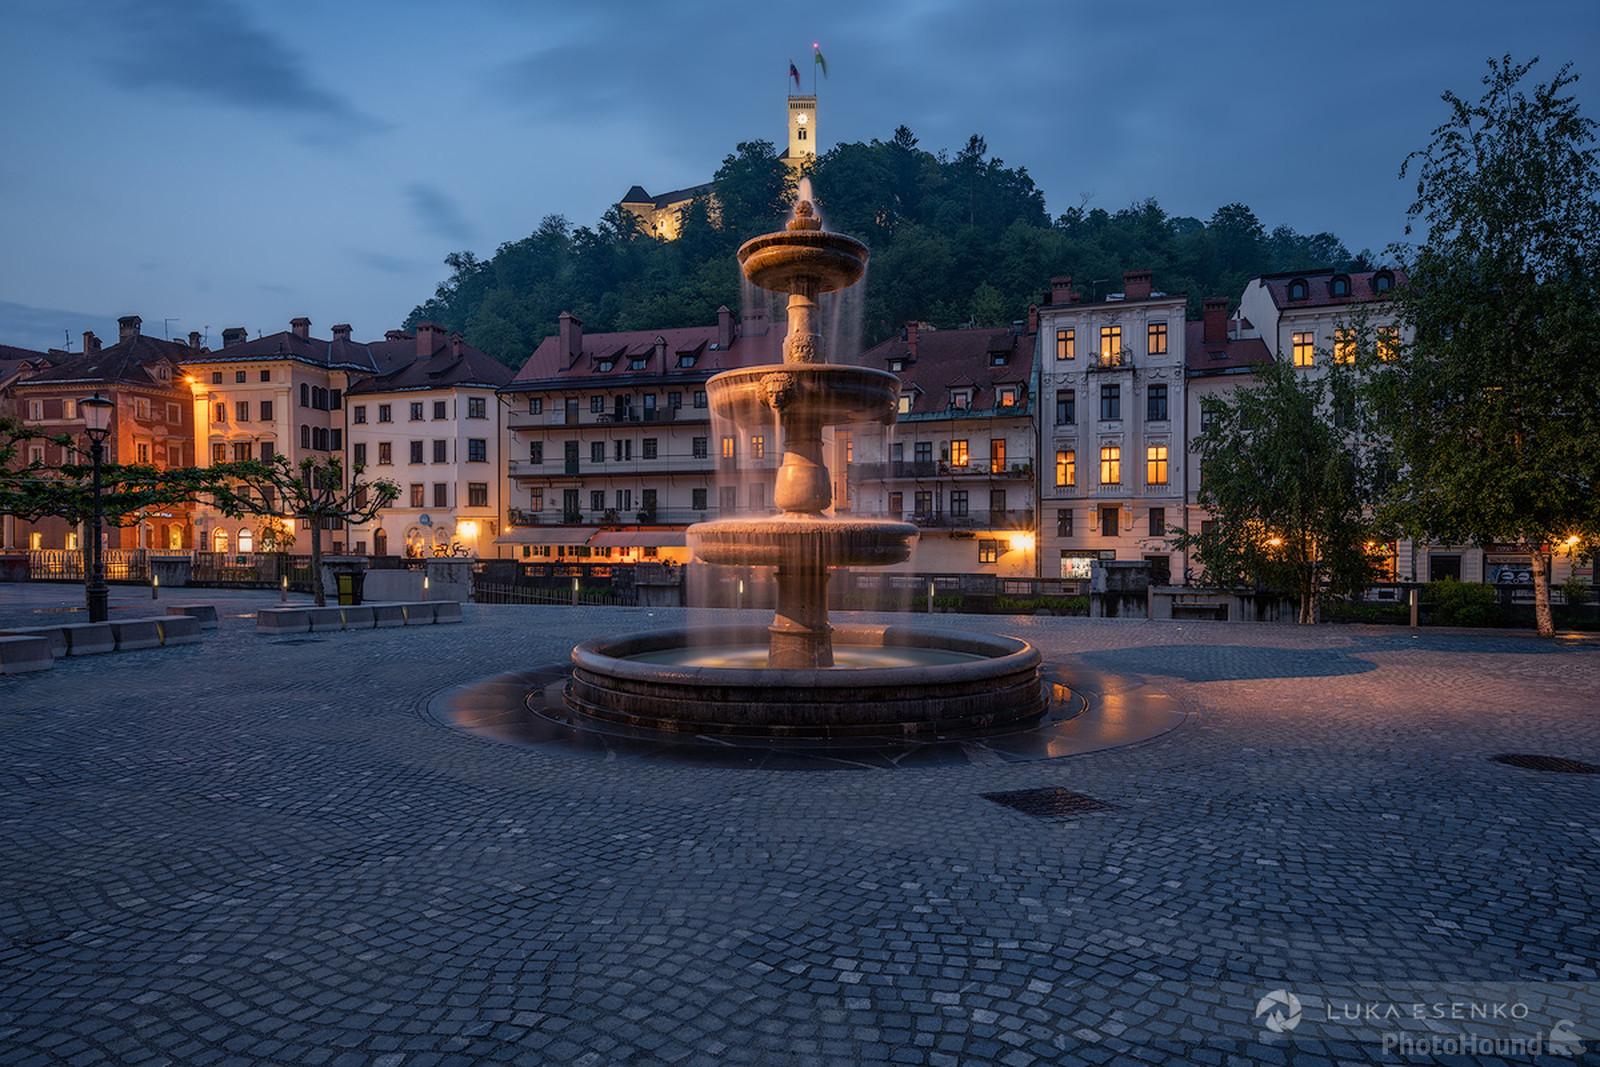 Image of Novi trg fountain by Luka Esenko